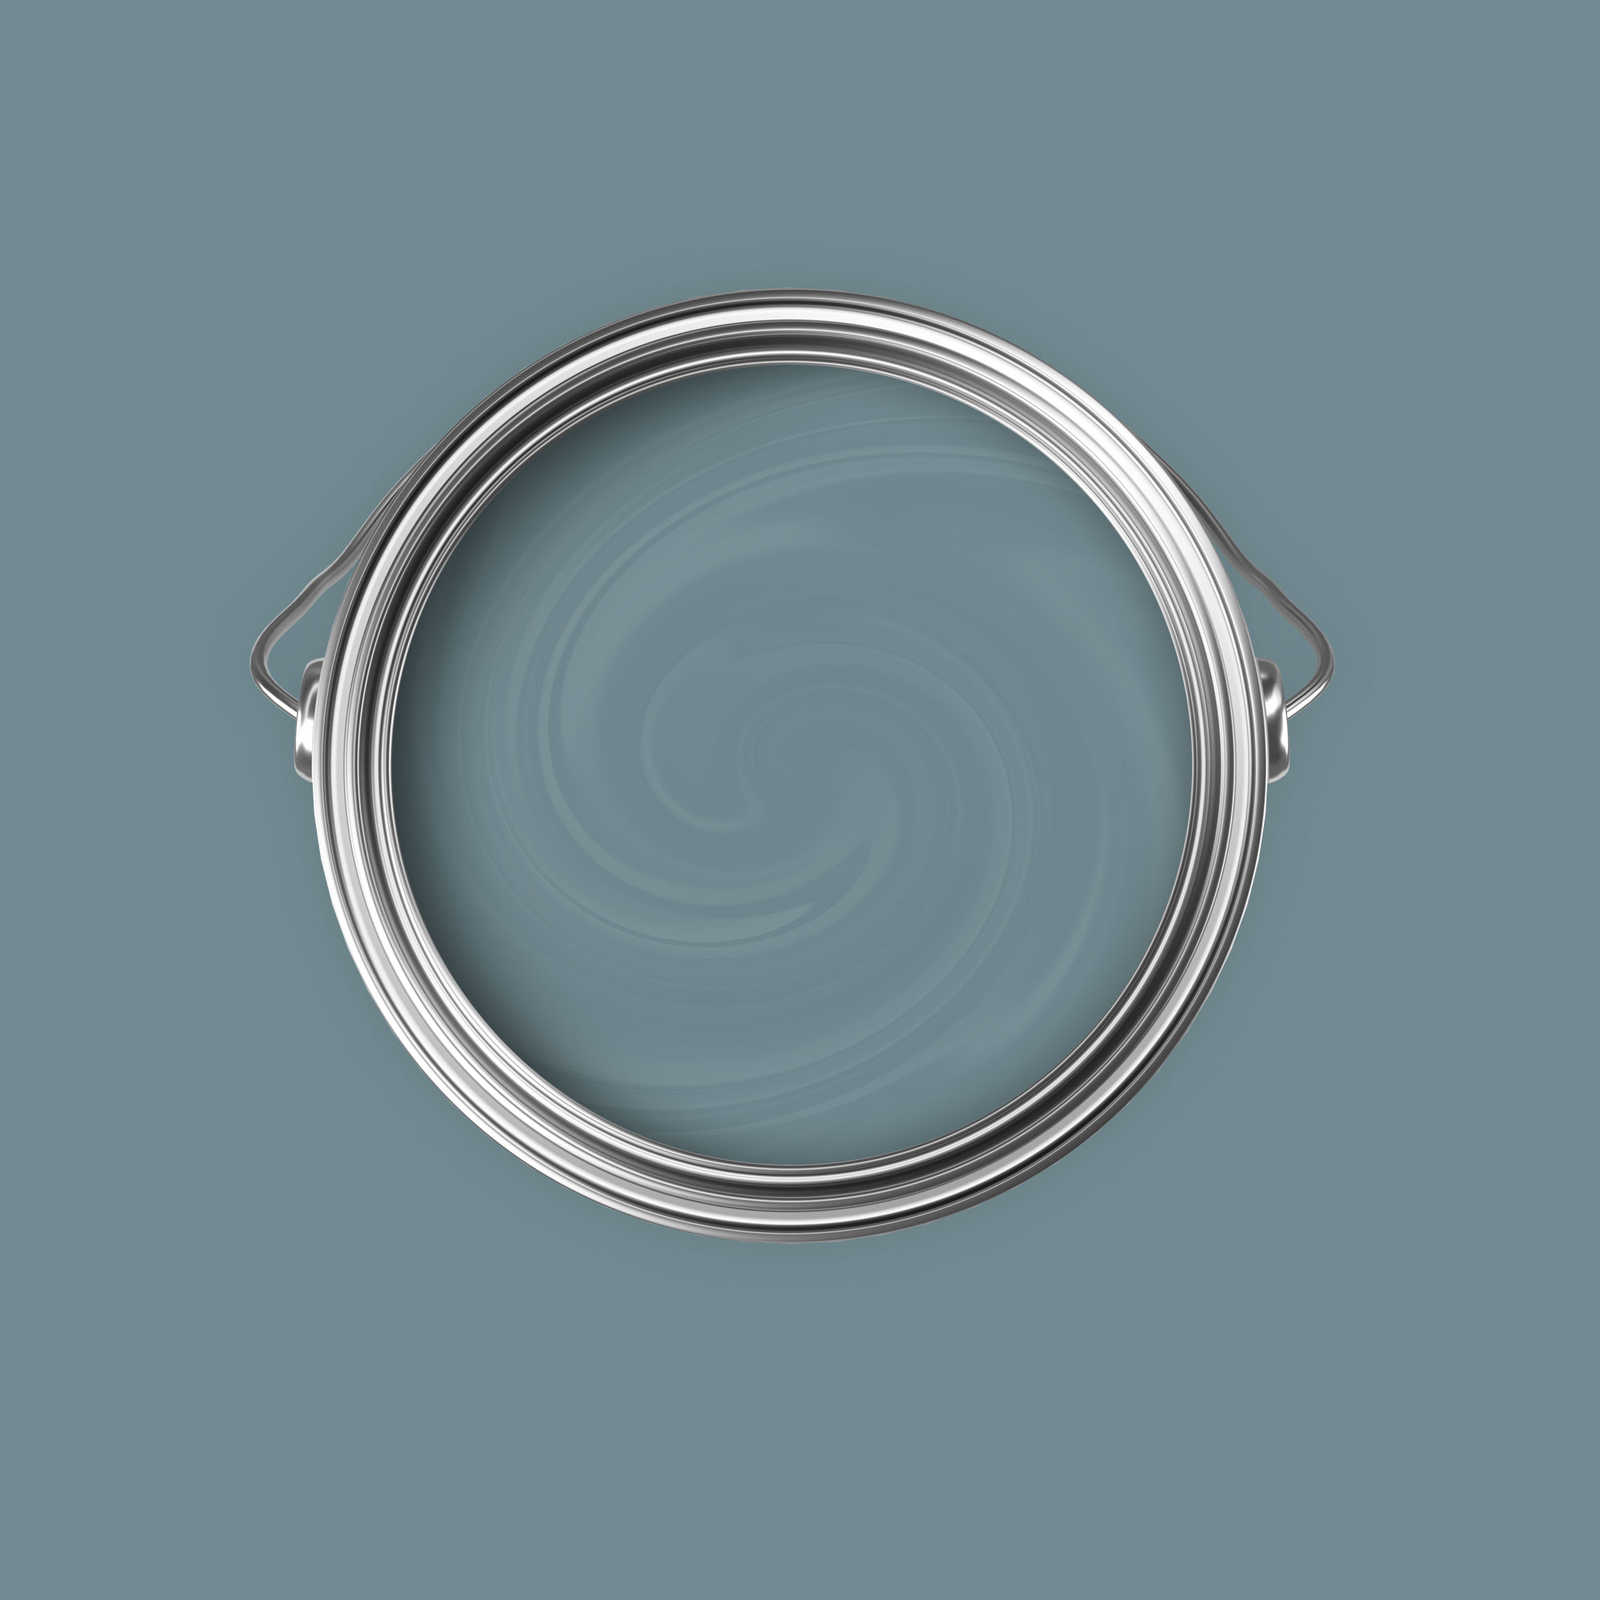             Premium Wandfarbe entspannendes Taubenblau »Balanced Blue« NW311 – 5 Liter
        